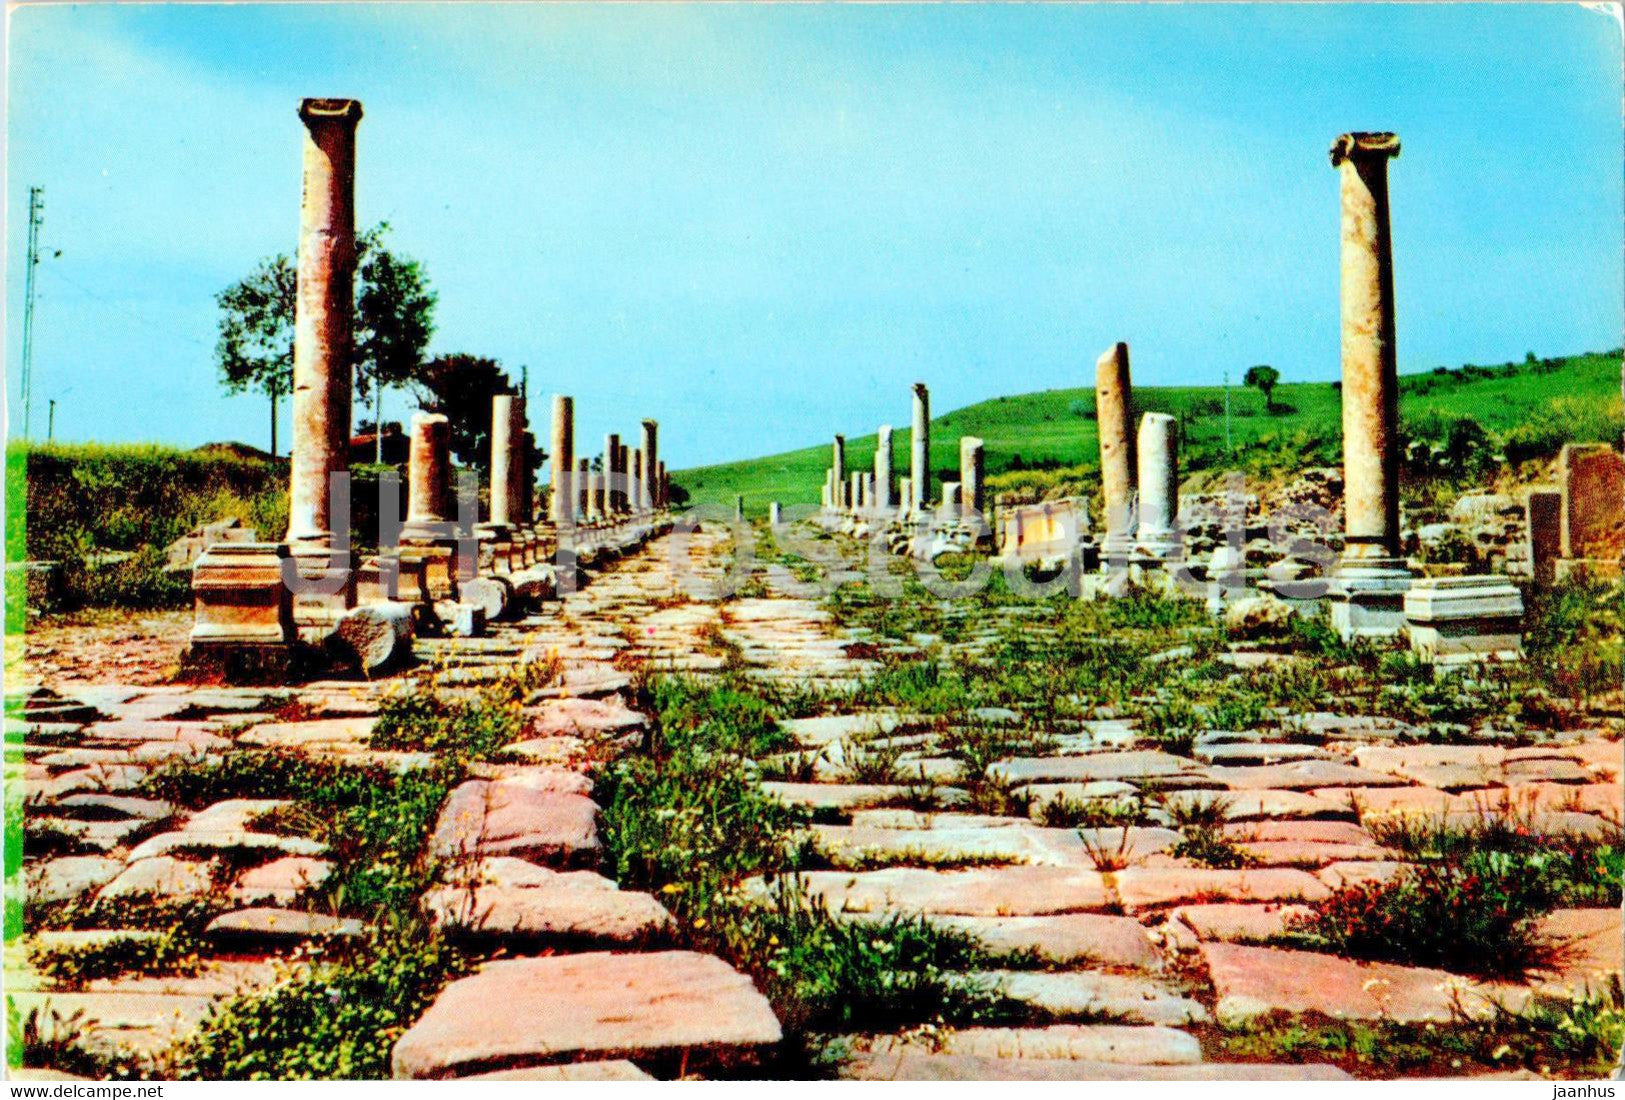 Bergama - Pergamum - Izmir - Mukaddes yol - Holy Way - ancient world - 847 - Turkey - unused - JH Postcards